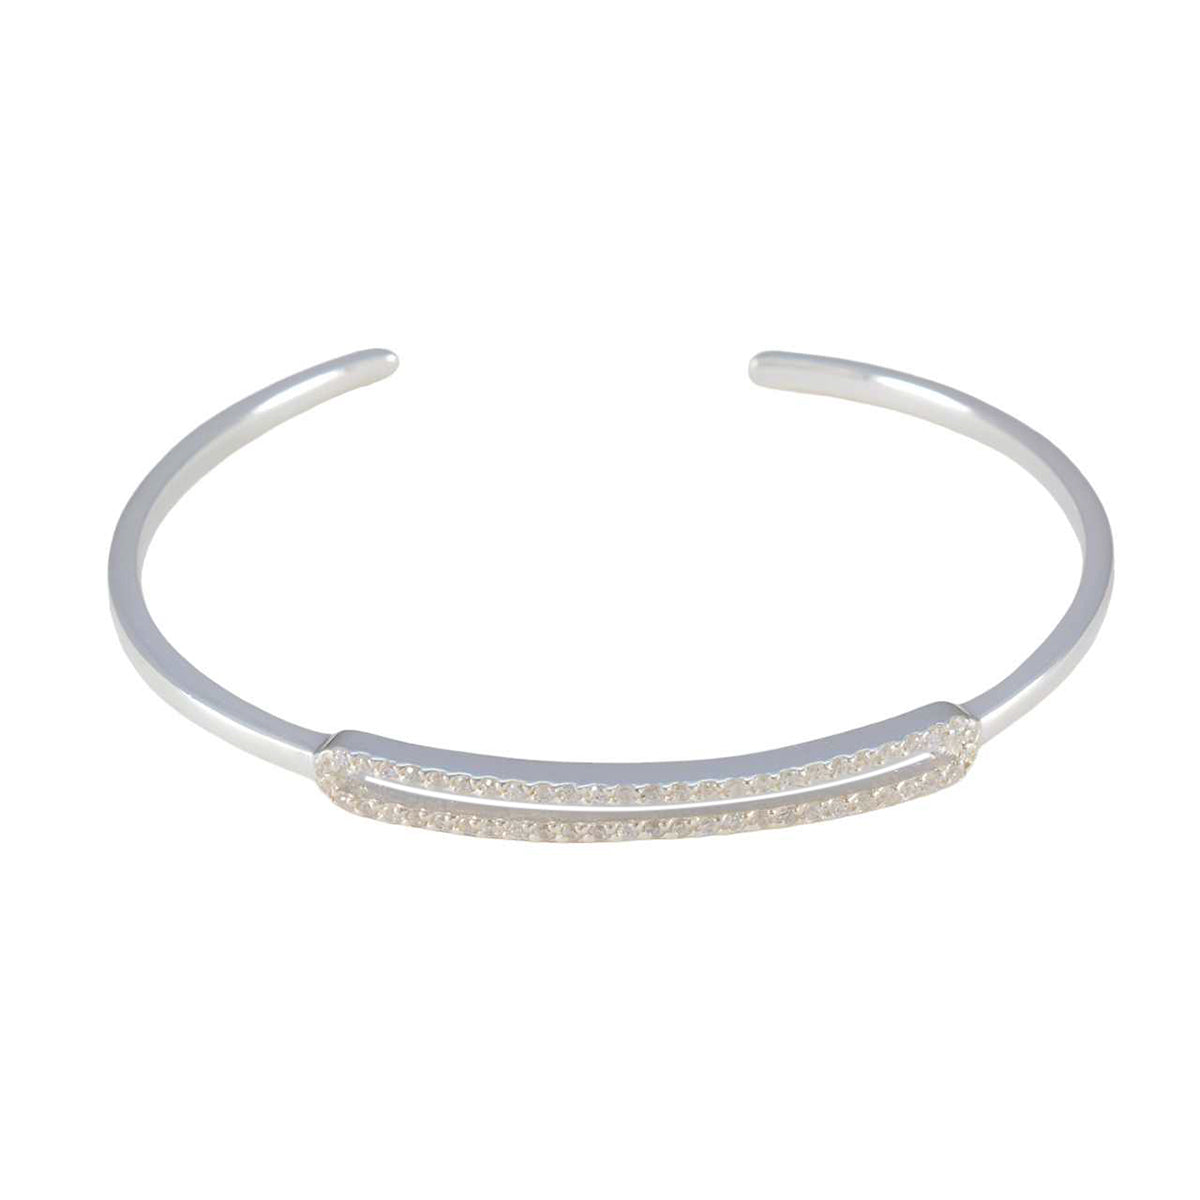 Riyo Beautiful 925 Sterling Silver Bracelet For Womens White CZ Bracelet Bezel Setting Bracelet Bangle Bracelet L Size 6-8.5 Inch.